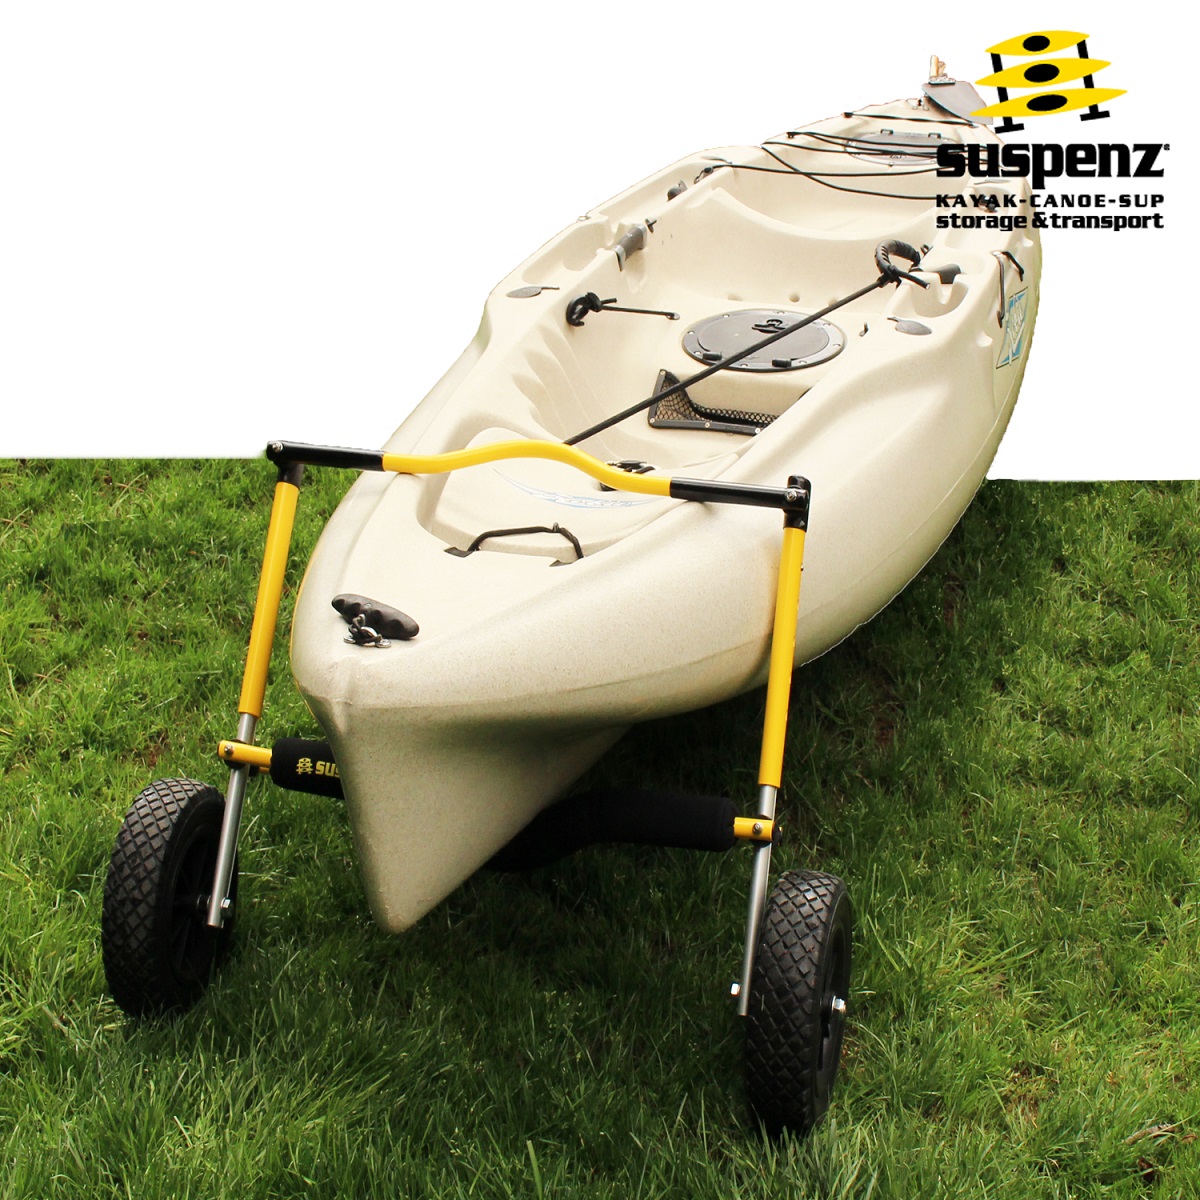 Suspenz END Cart - X-Large Kayak